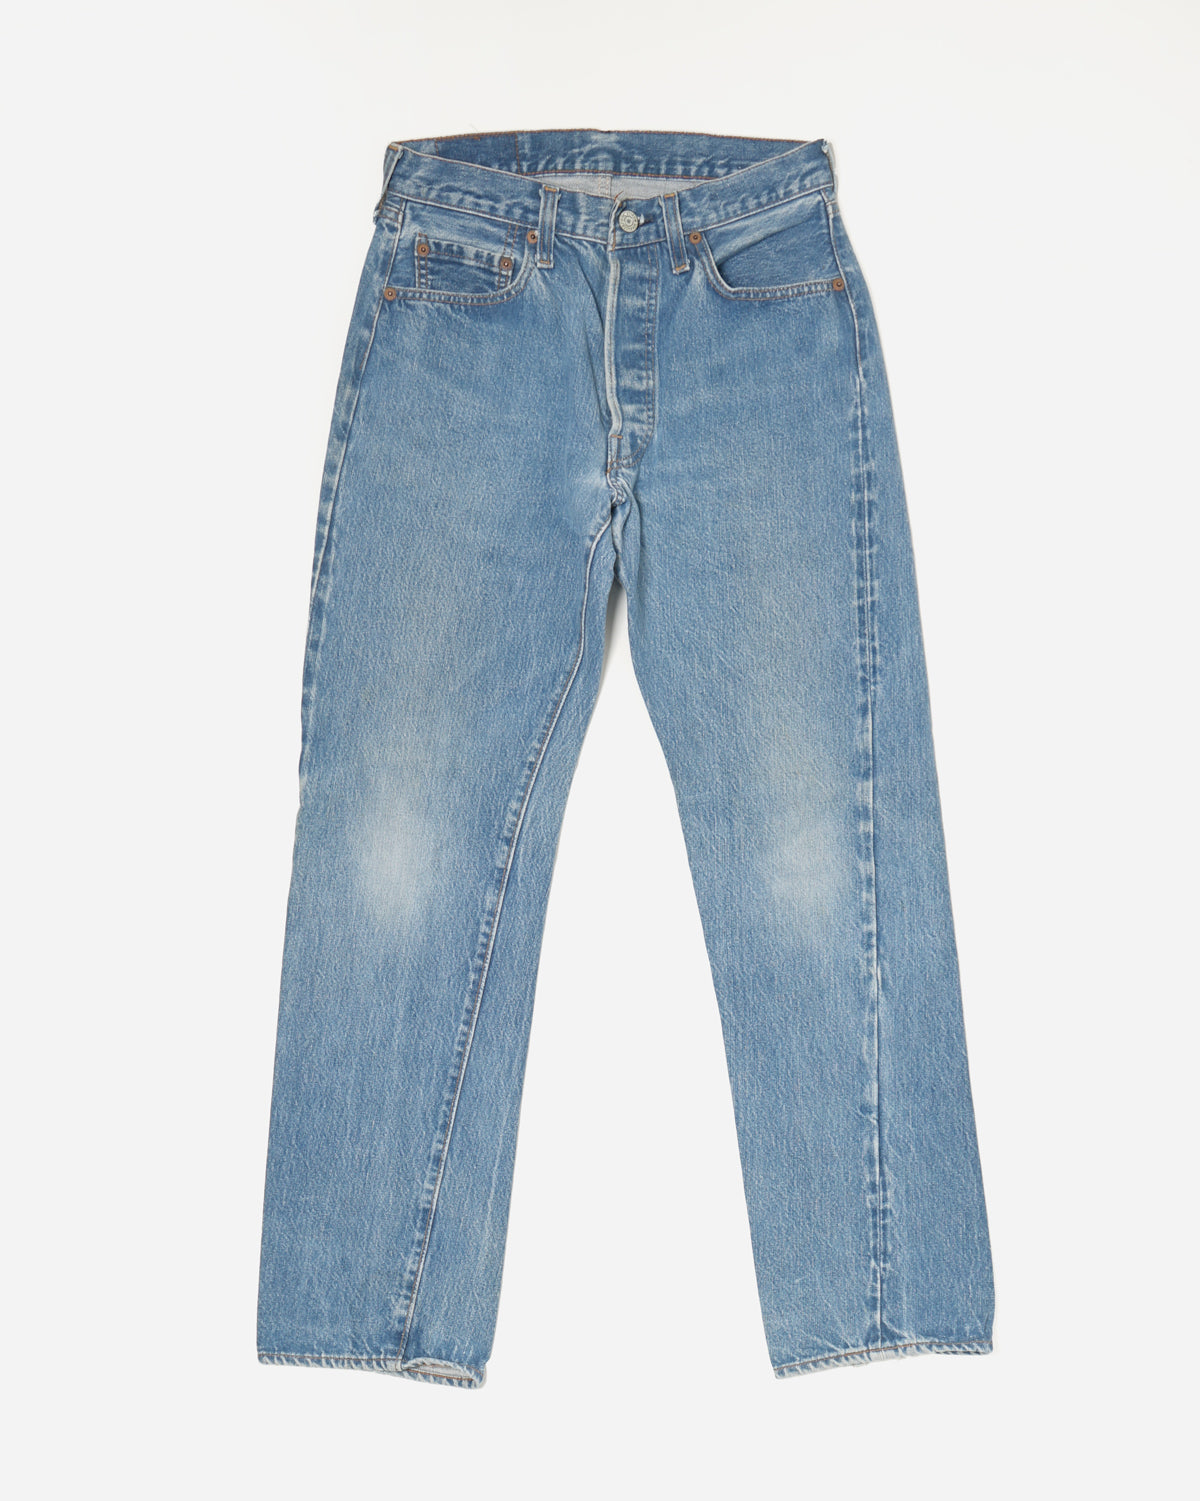 1980's 501 Redline Straight Fit Denim Pants / size: 29